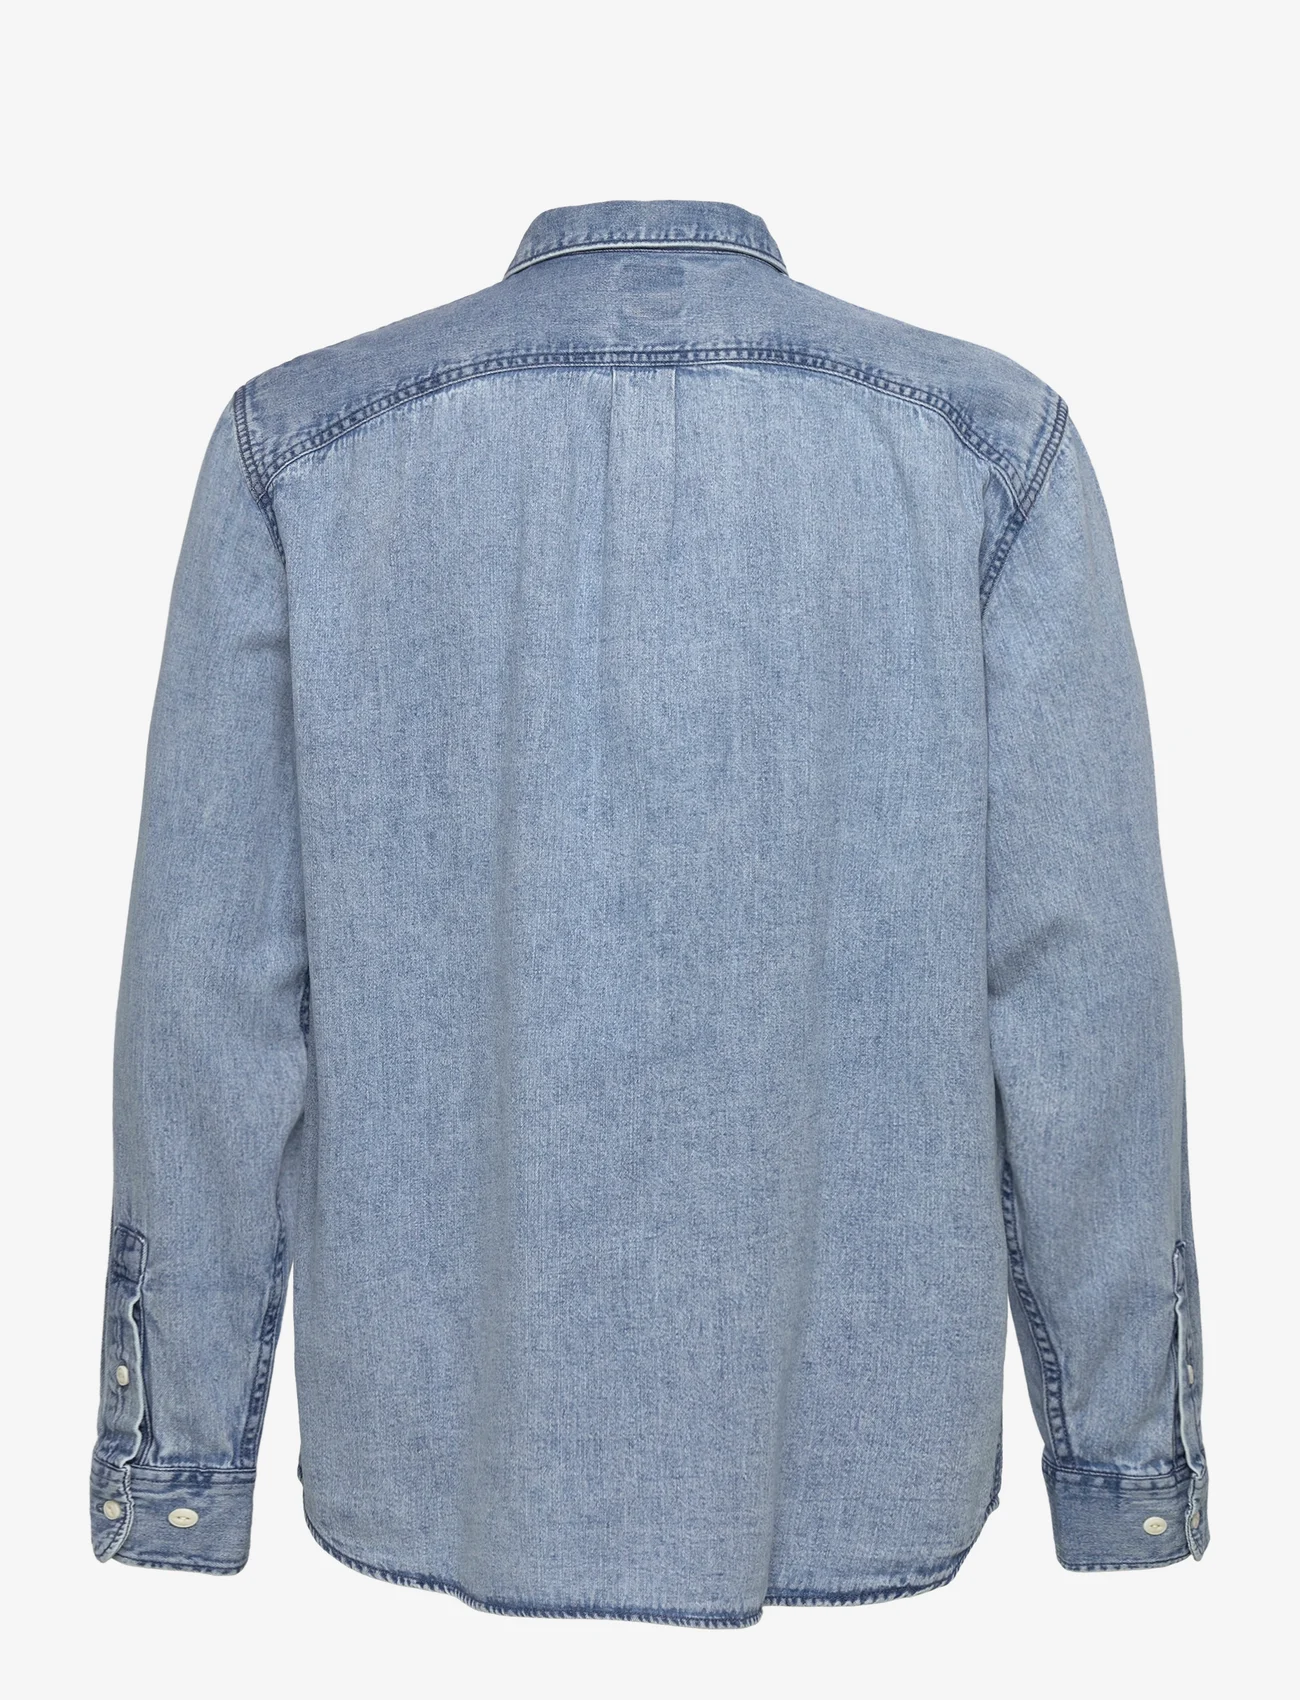 Lee Jeans - RIVETED SHIRT - rutede skjorter - summer haze - 1